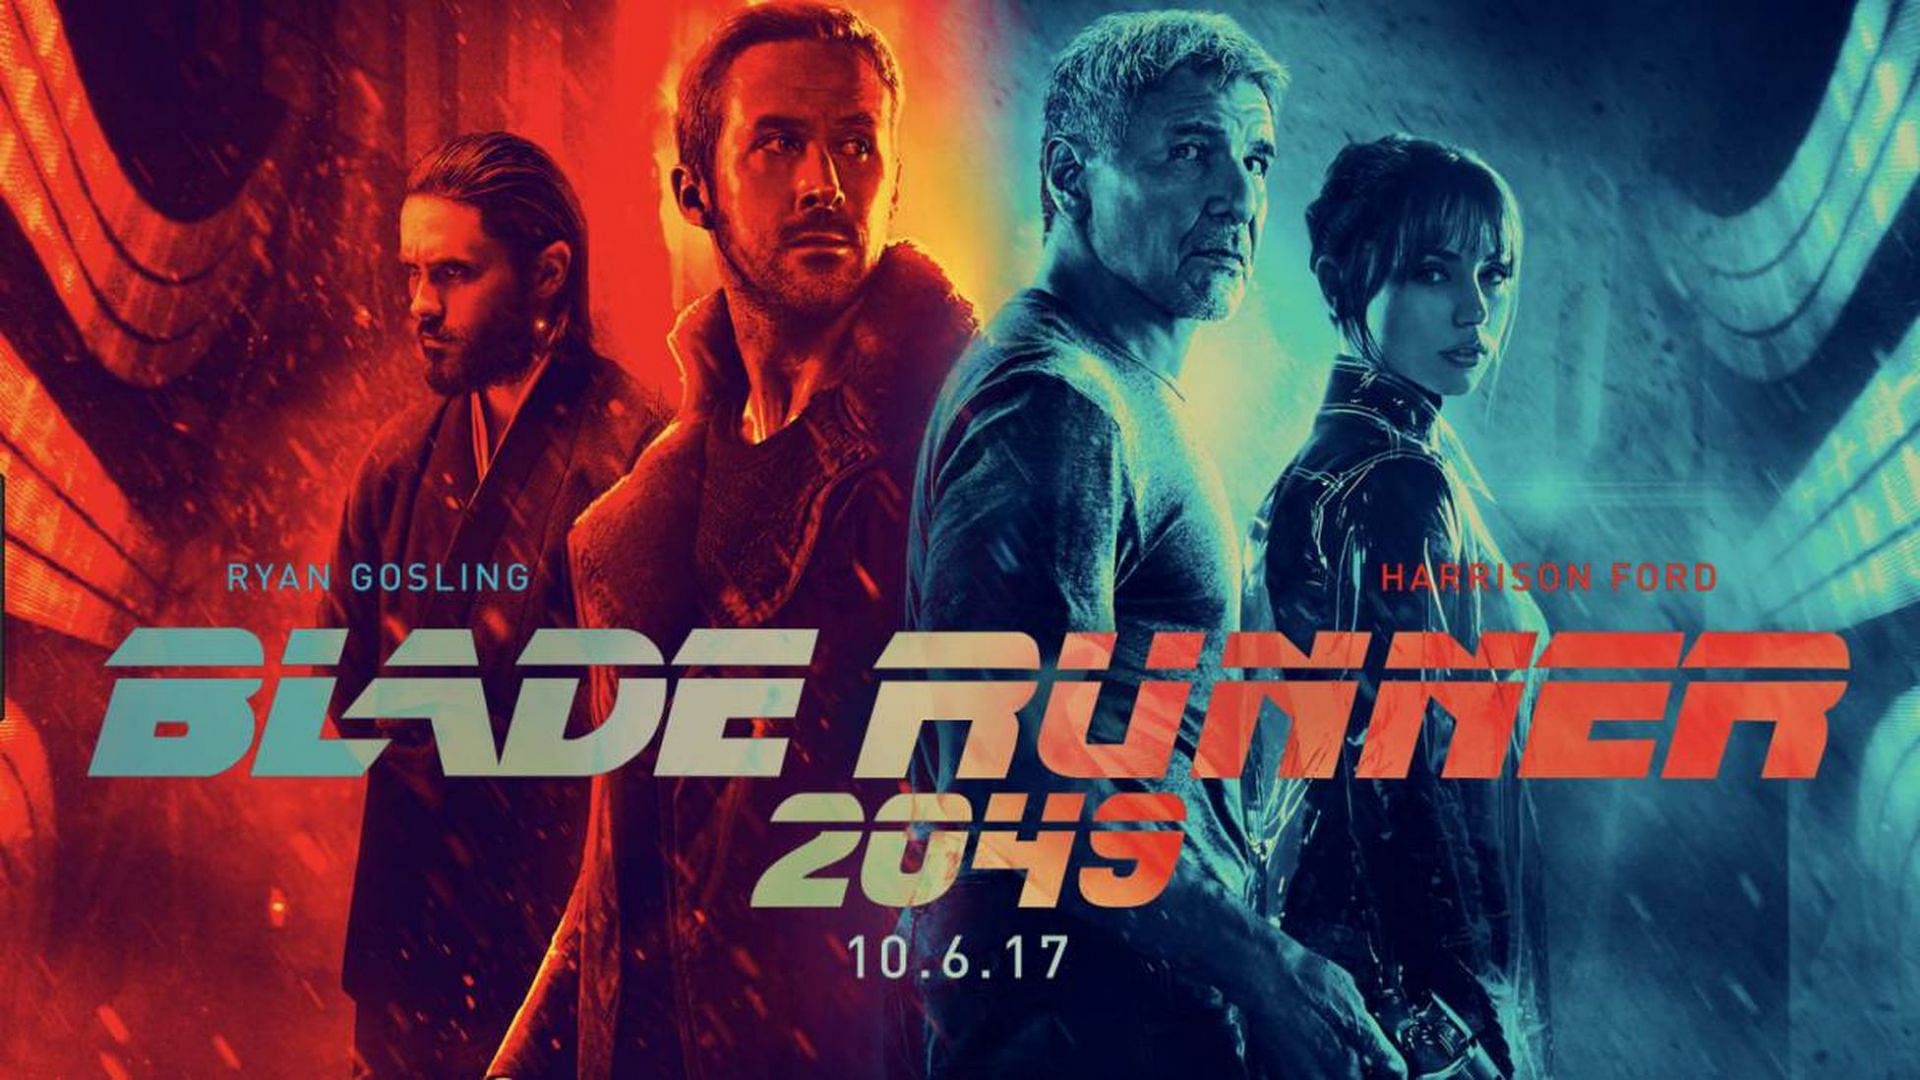 Blade Runner 2049 (Image via Warner Bros)